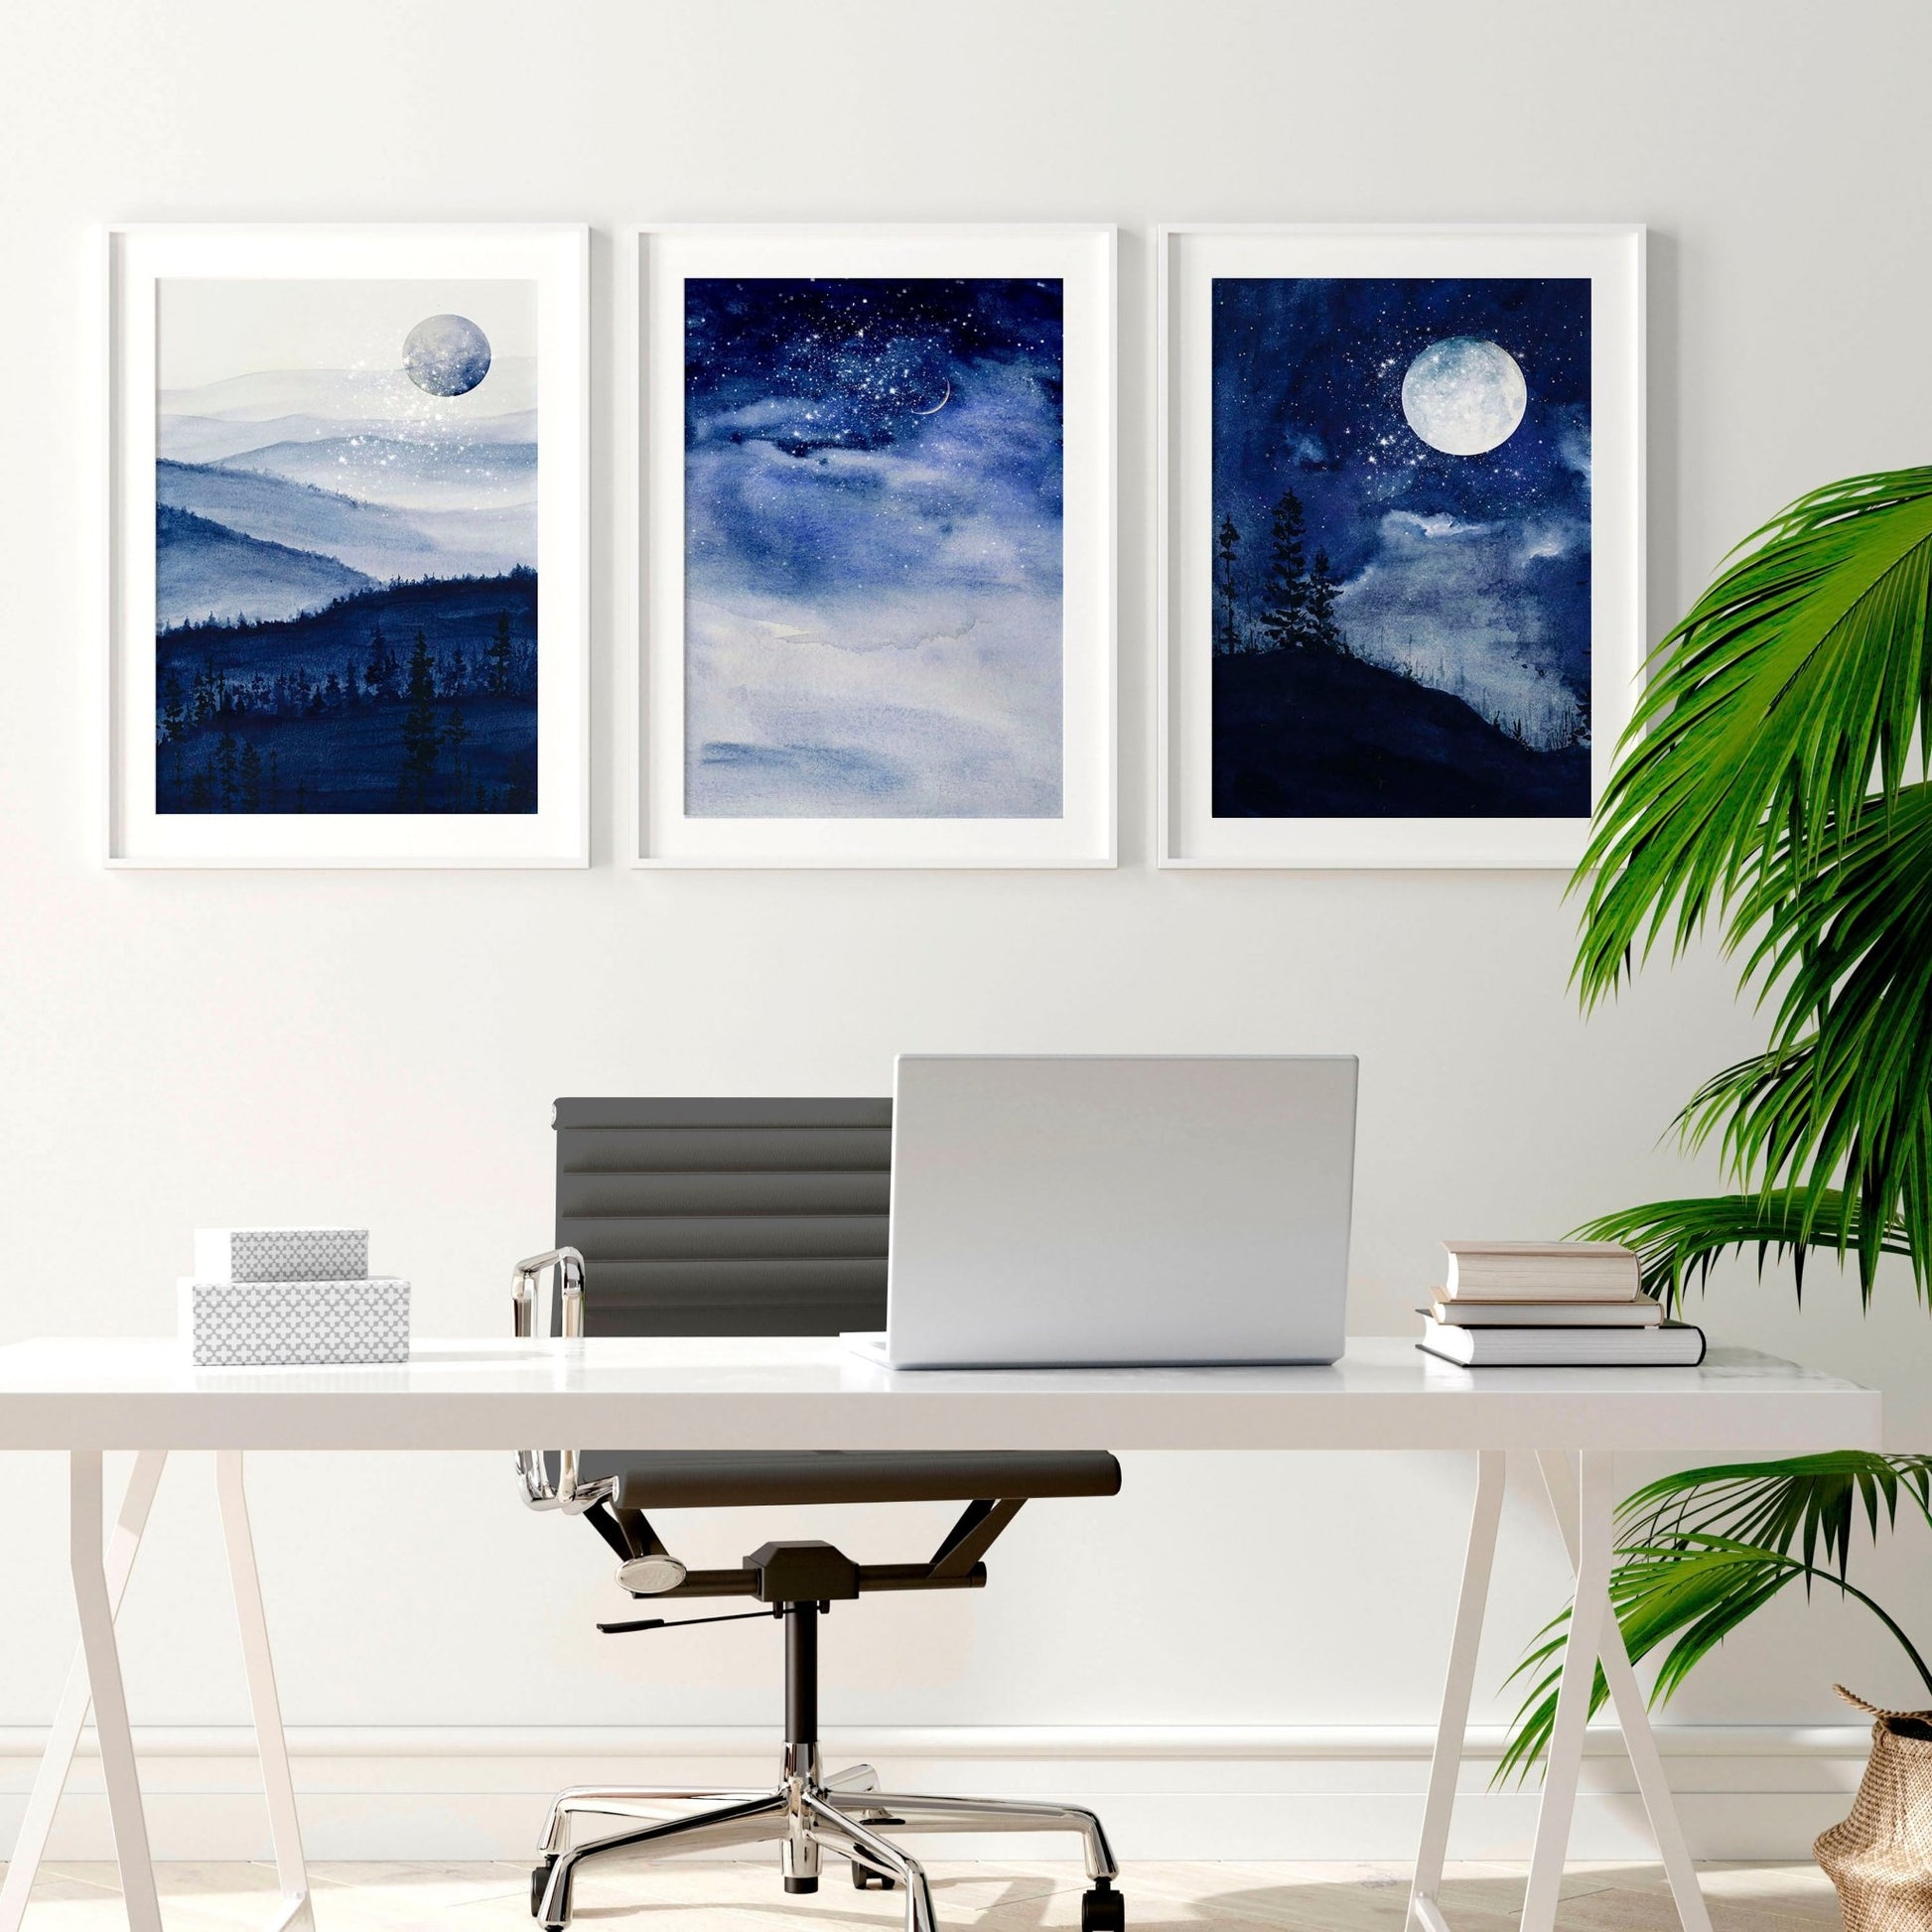 Home office decor ideas for him | set of 3 framed wall art